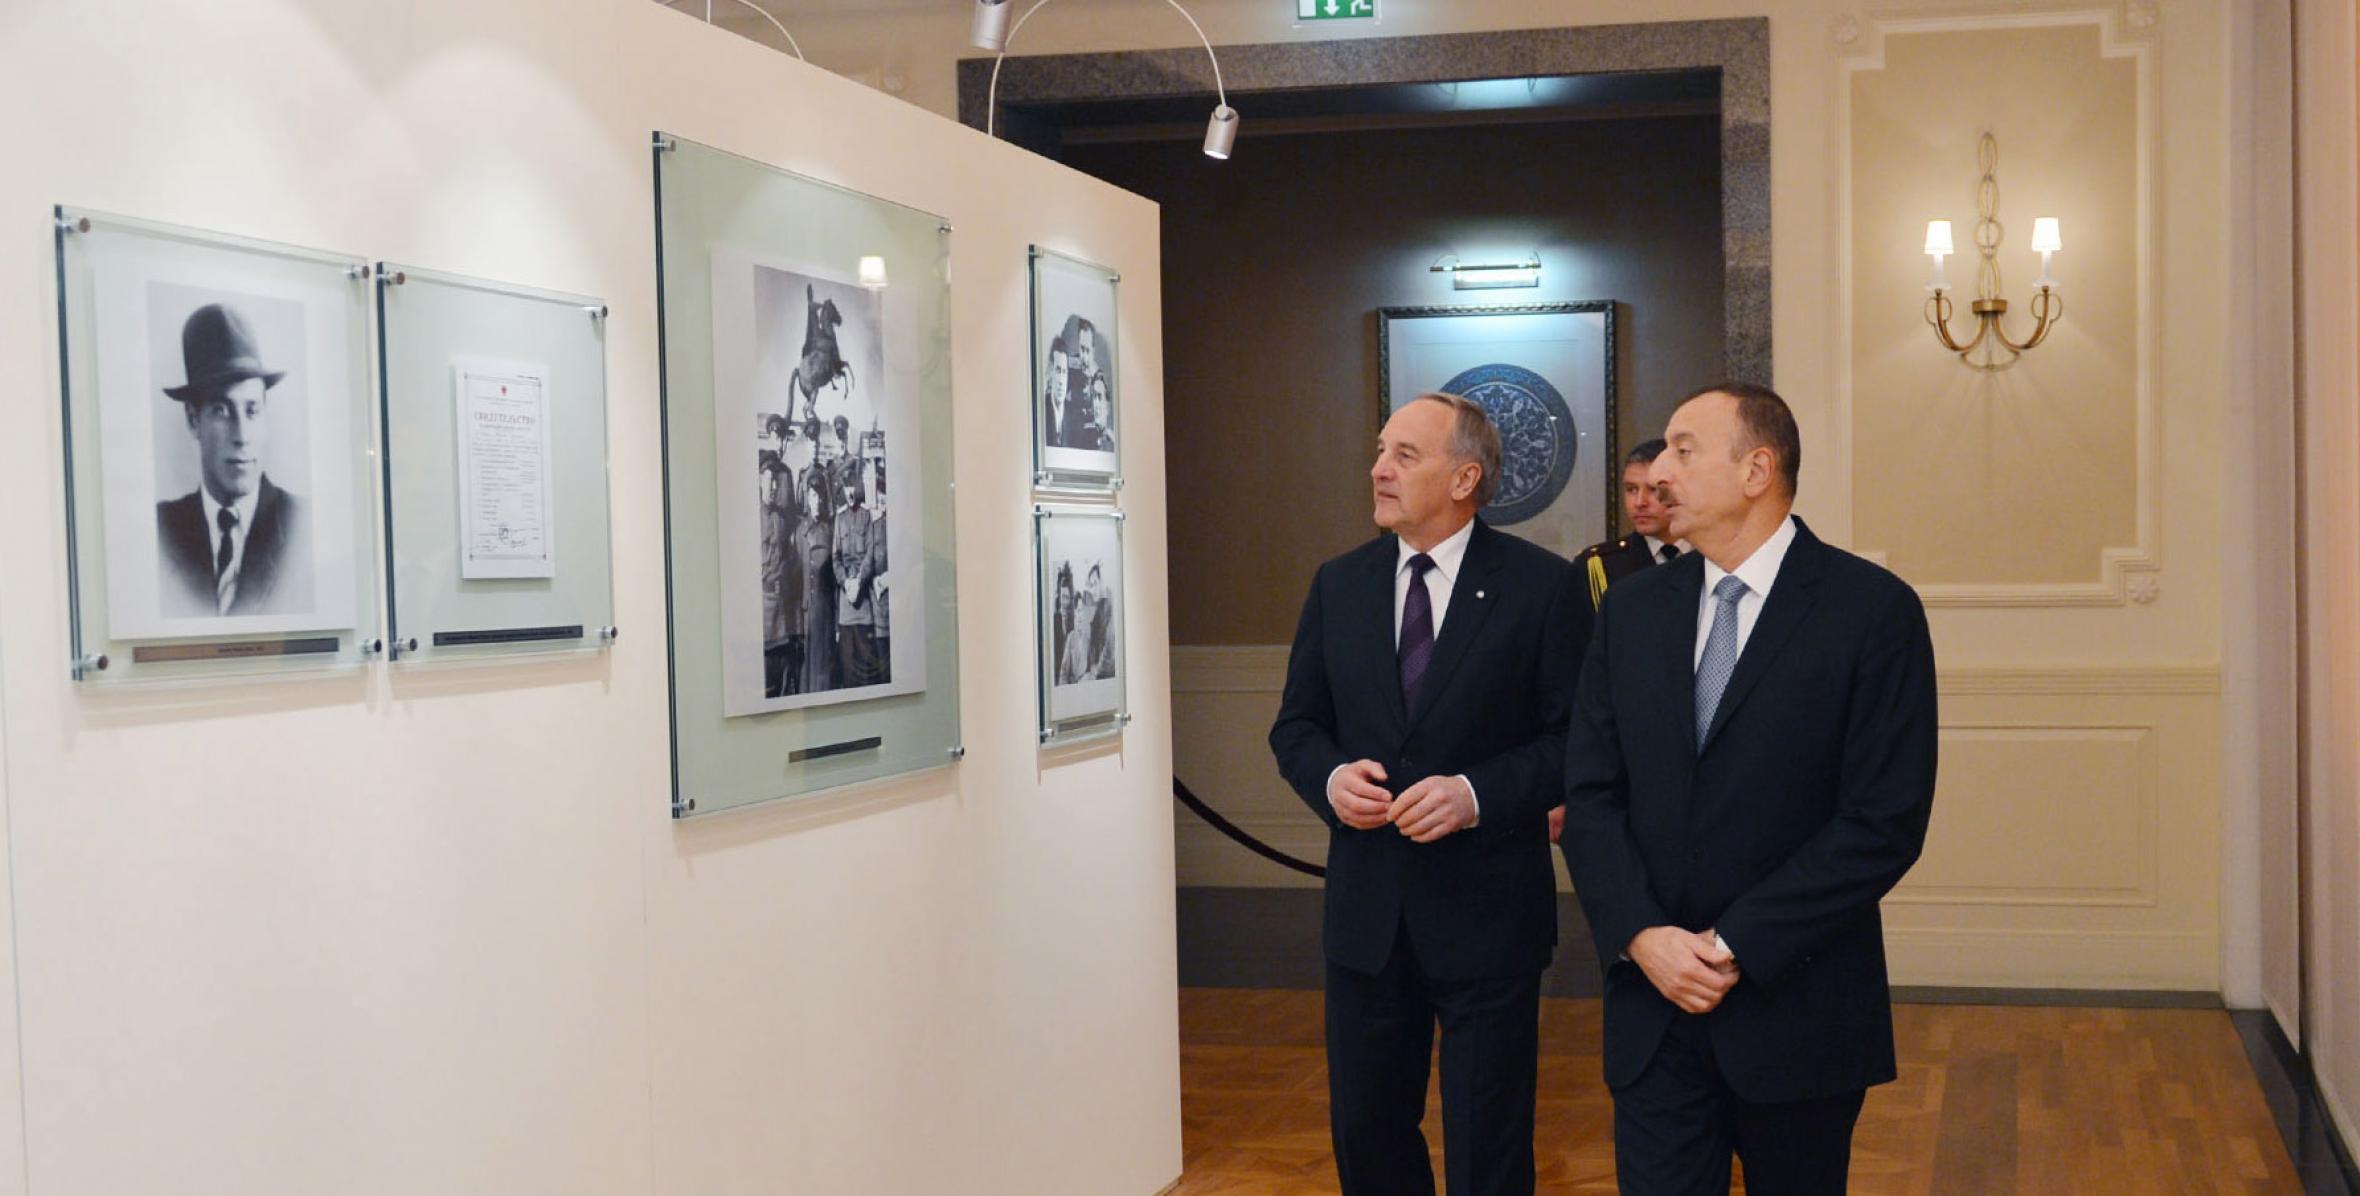 Latvian President Andris Berzins visited the Heydar Aliyev Foundation